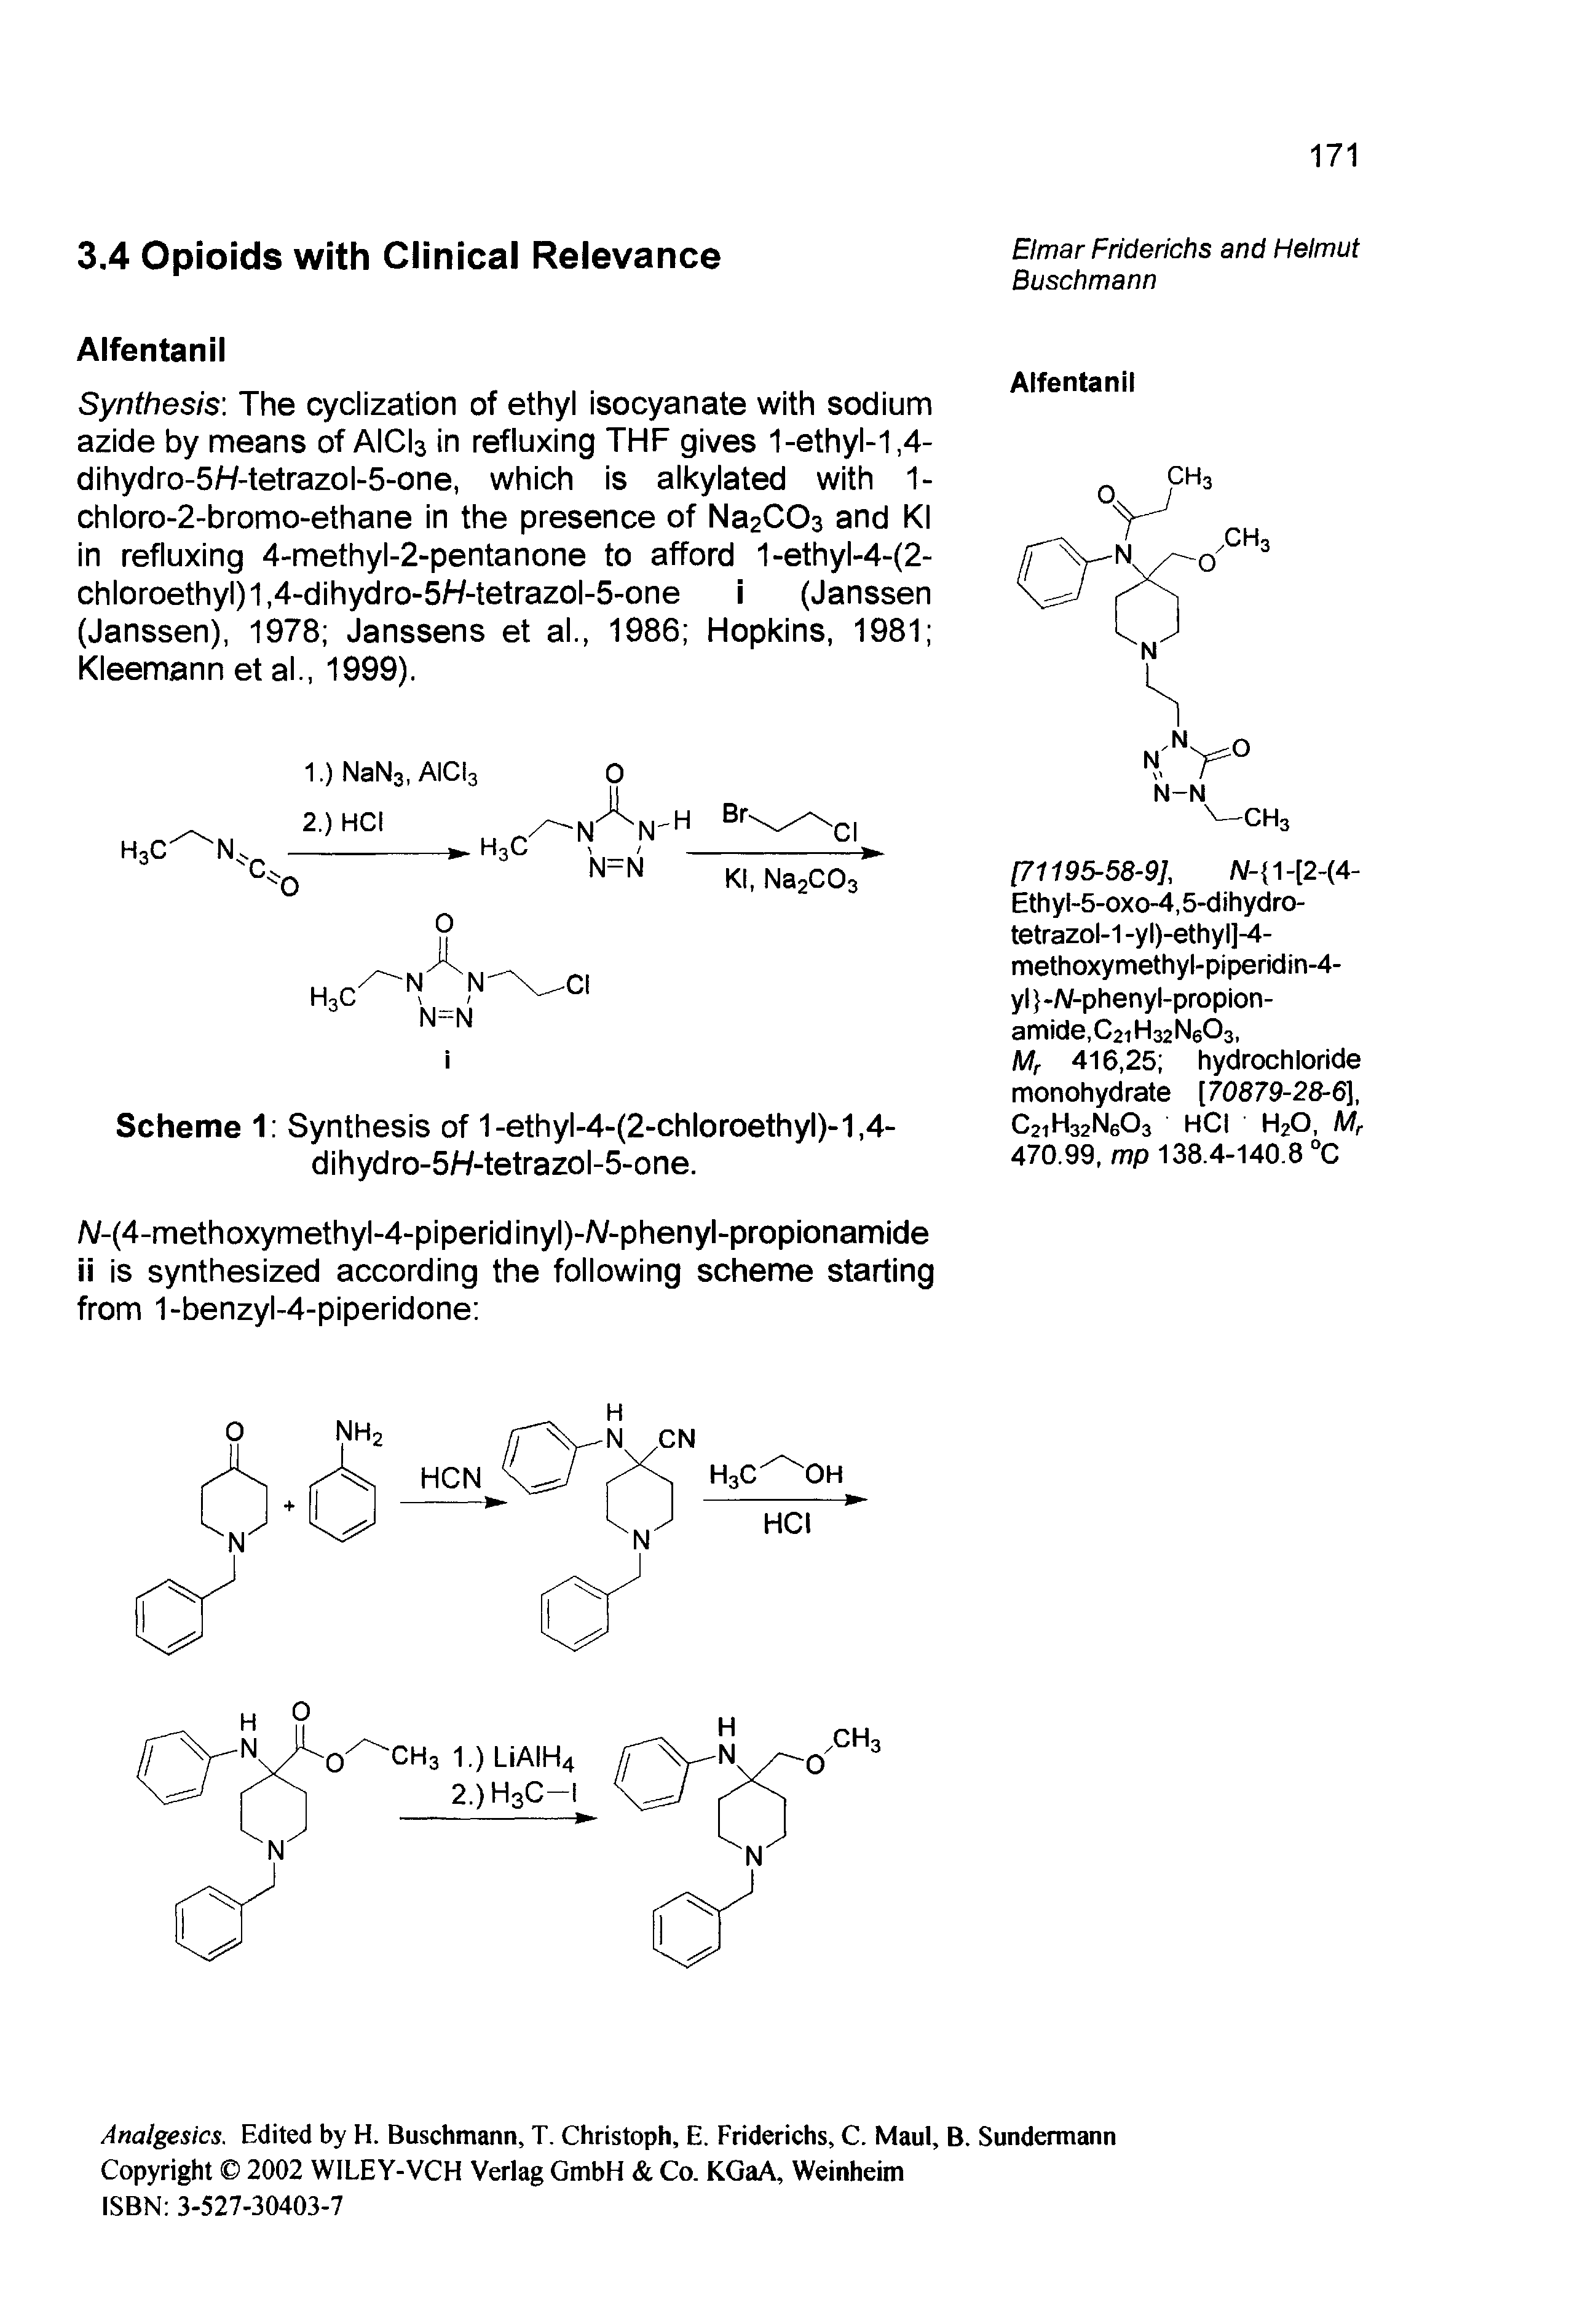 Scheme 1 Synthesis of 1-ethyl-4-(2-chloroethyl)-1,4-dihydro-5H-tetrazol-5-one.